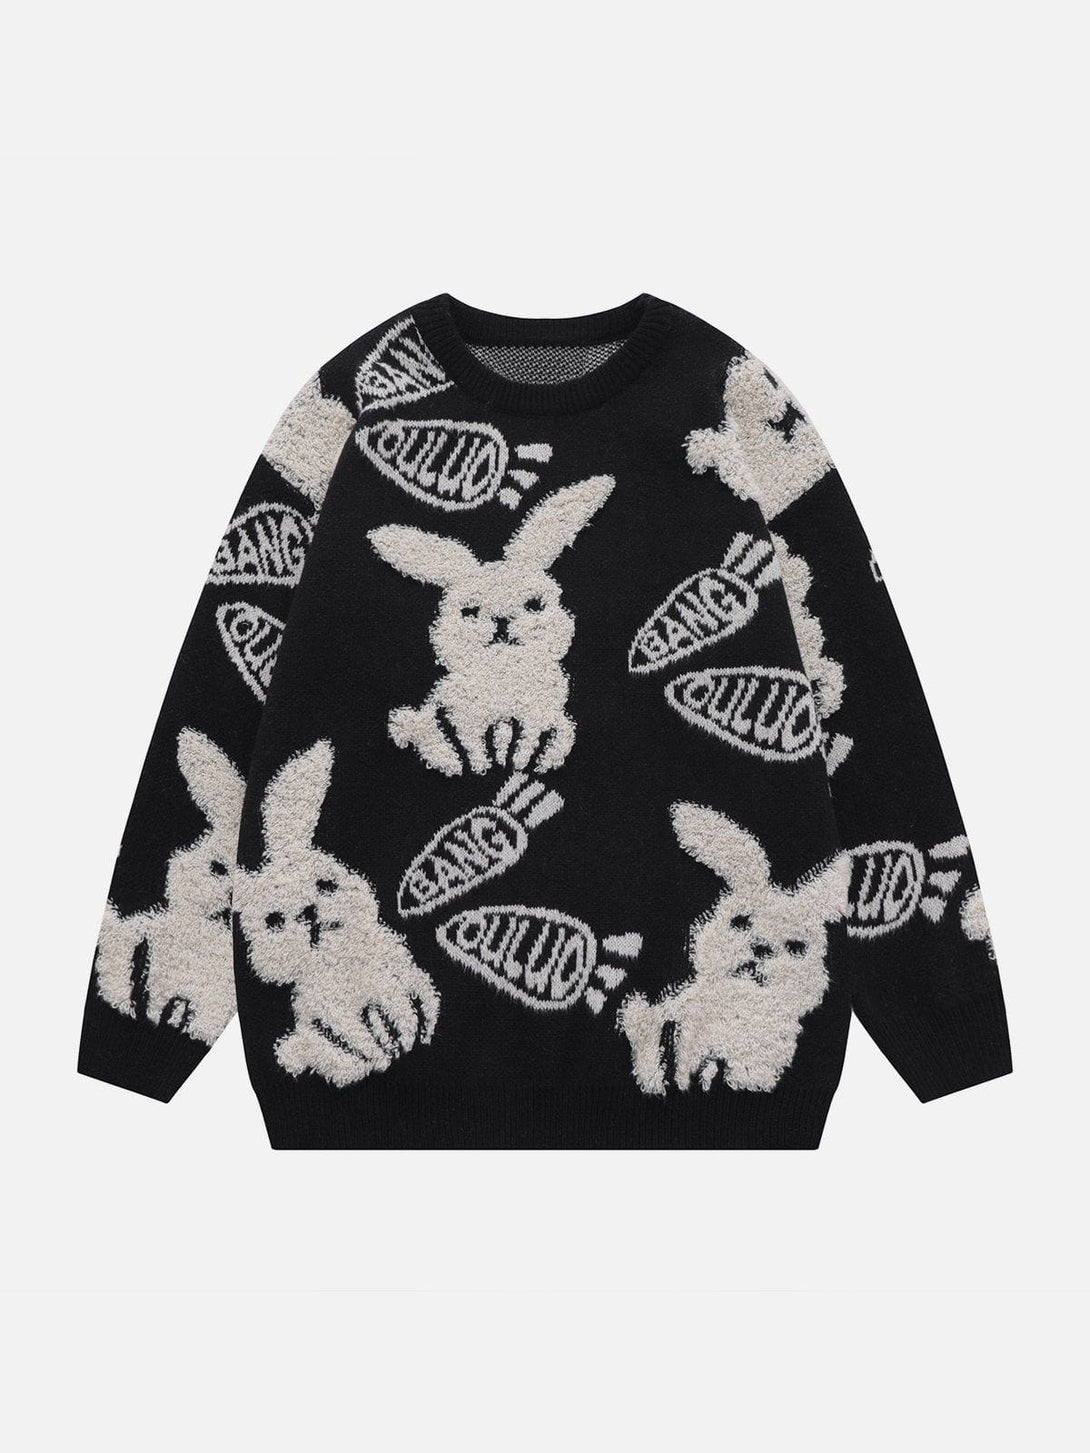 Levefly - Flocking Rabbit Knit Sweater - Streetwear Fashion - levefly.com